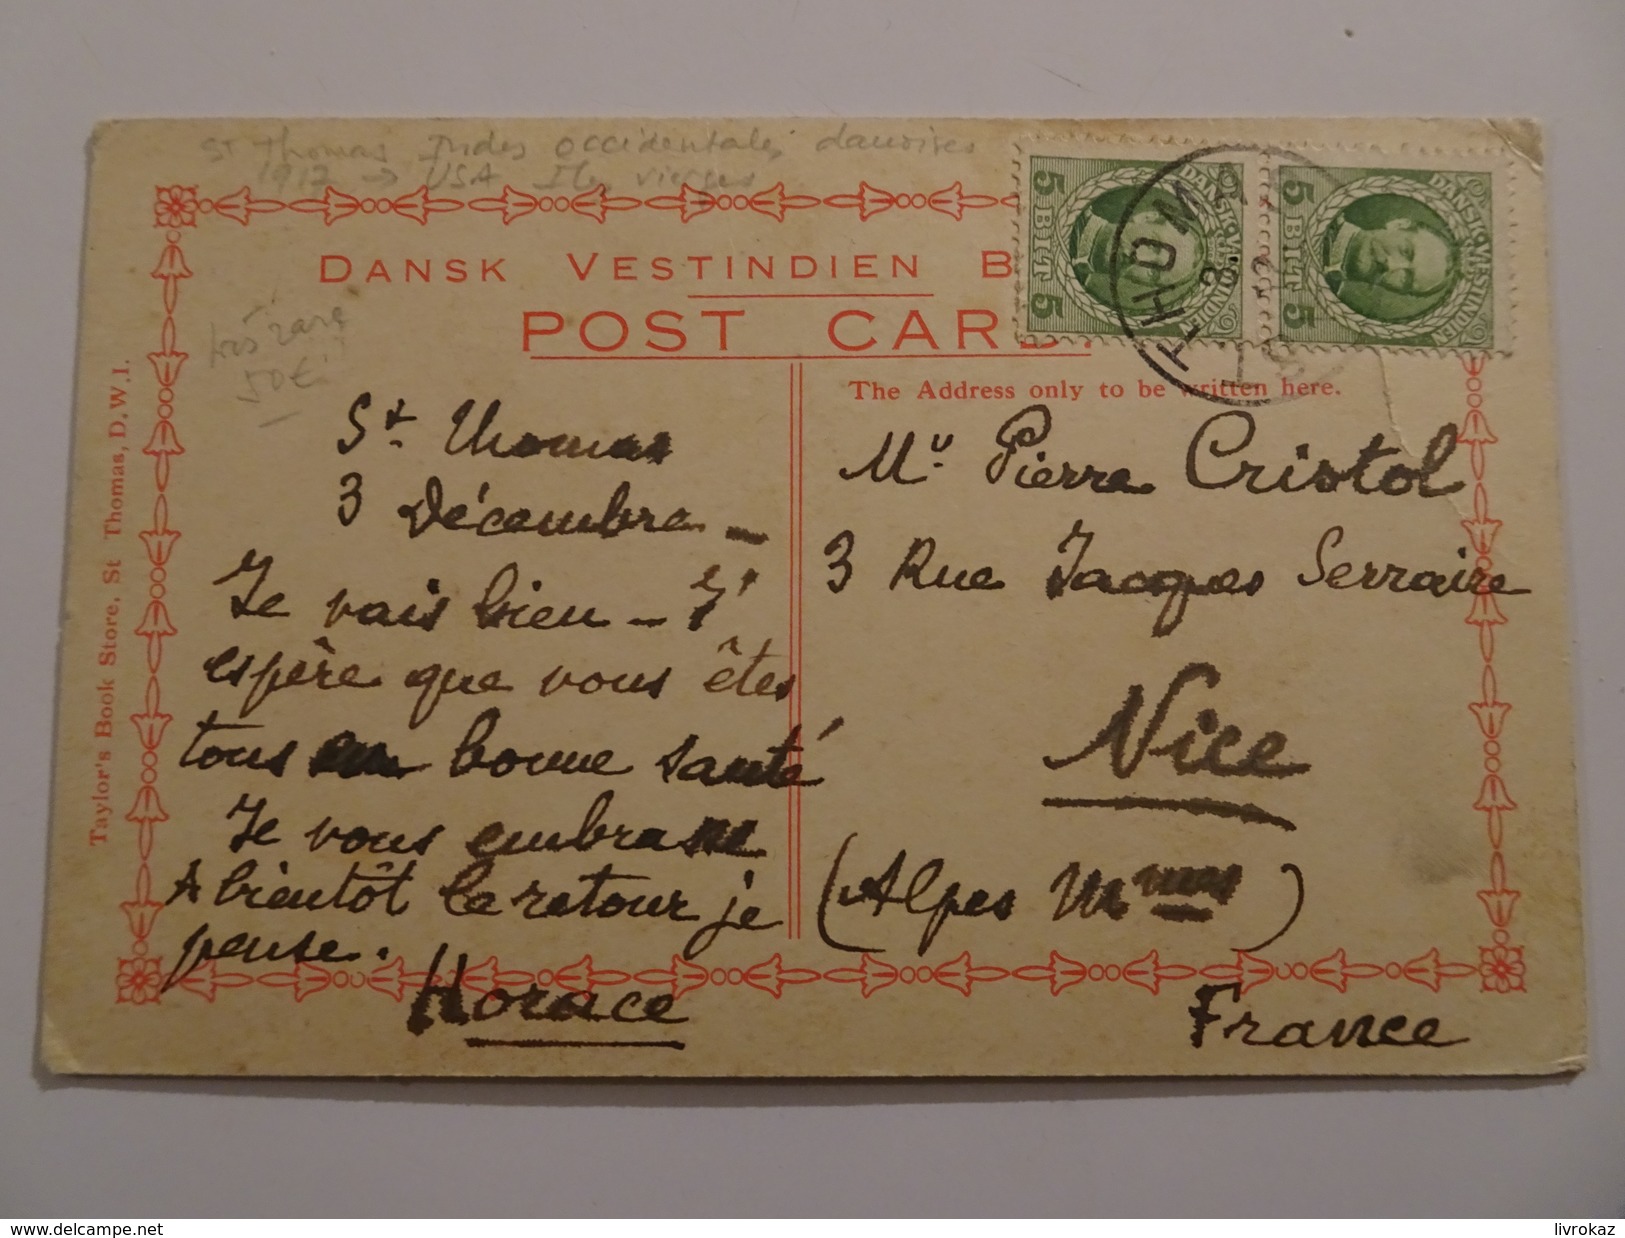 Saint THomas, Indes Occidentales Danoises, Dansk Vestindien, Iles Vierges (USA), A Black Diamond, 1912 - Jungferninseln, Amerik.